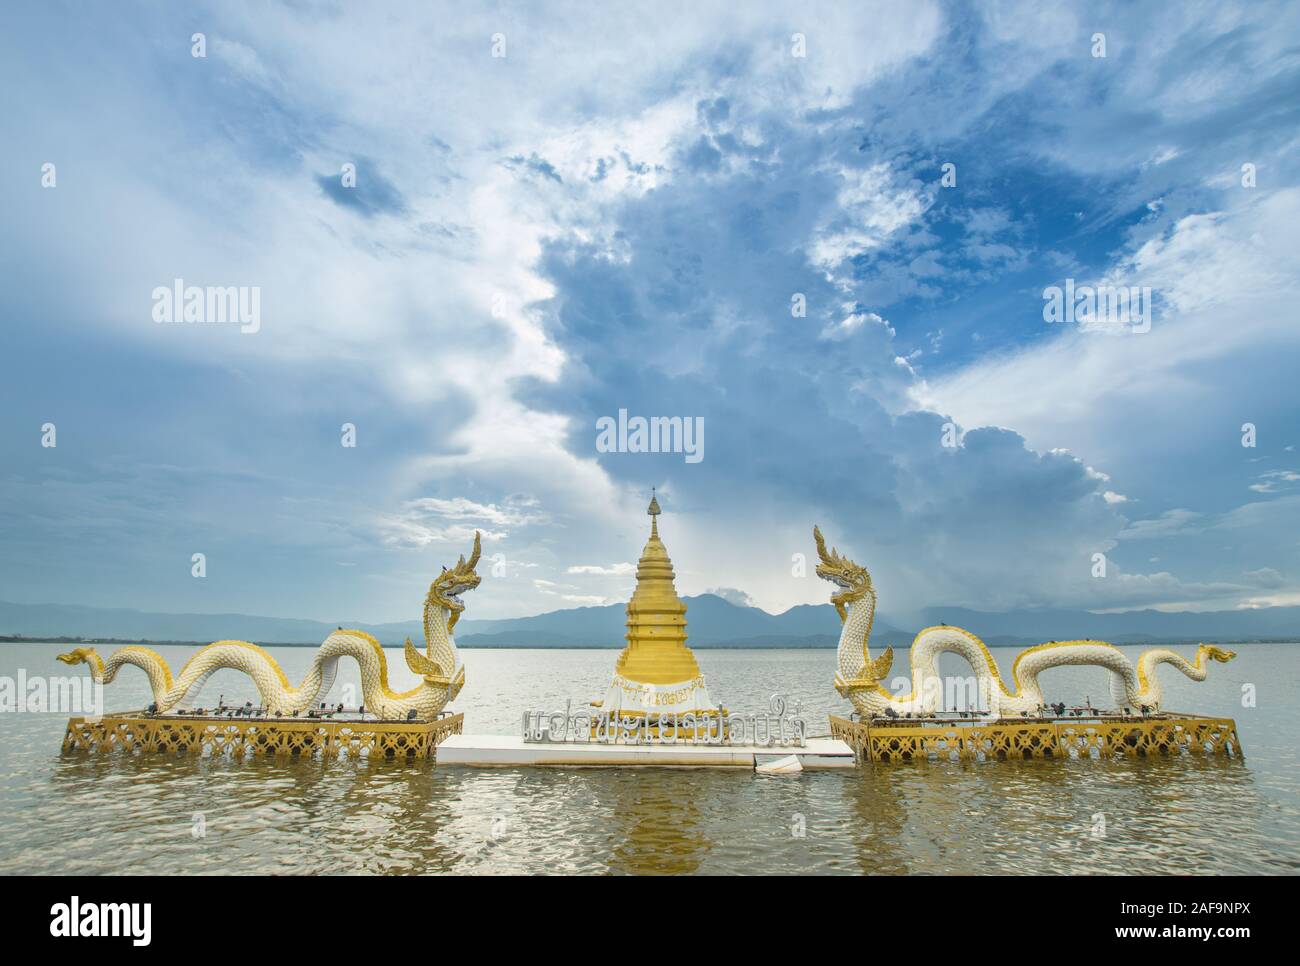 Phayao, Thailand - October 13, 2019: The Naga statue in Phayao lake (Kwan Phayao) with blue sky background. Stock Photo